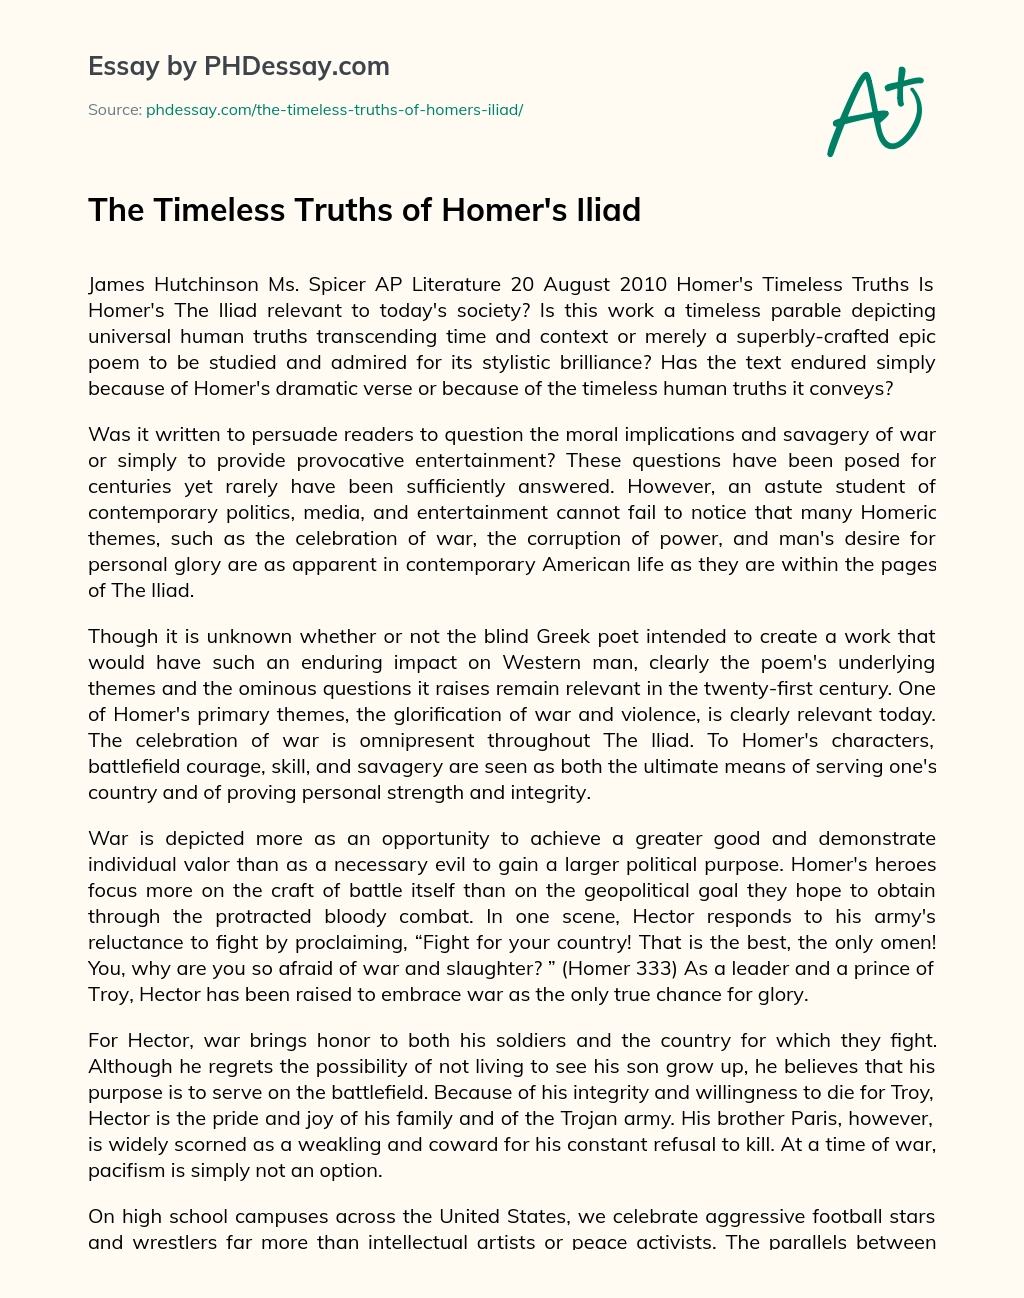 The Timeless Truths of Homer’s Iliad essay